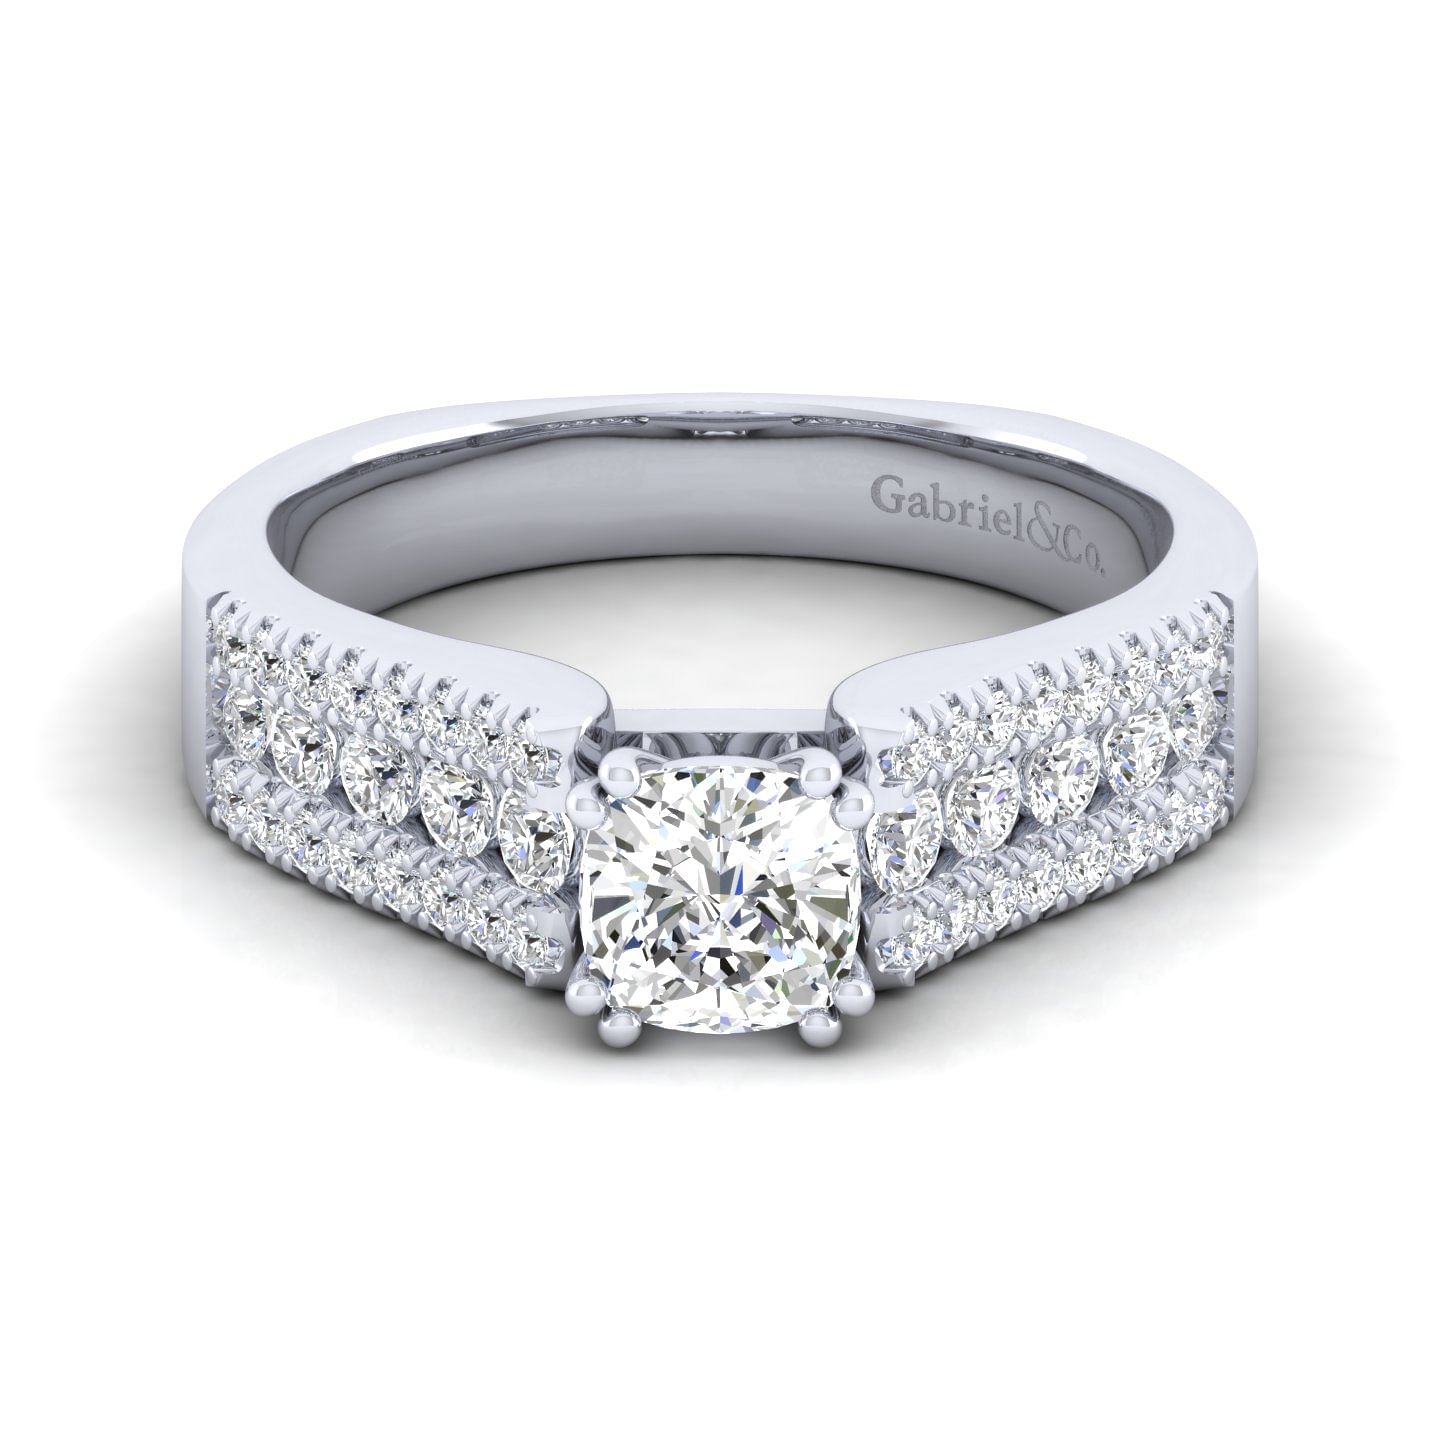 14K White Gold Wide Band Cushion Cut Diamond Engagement Ring